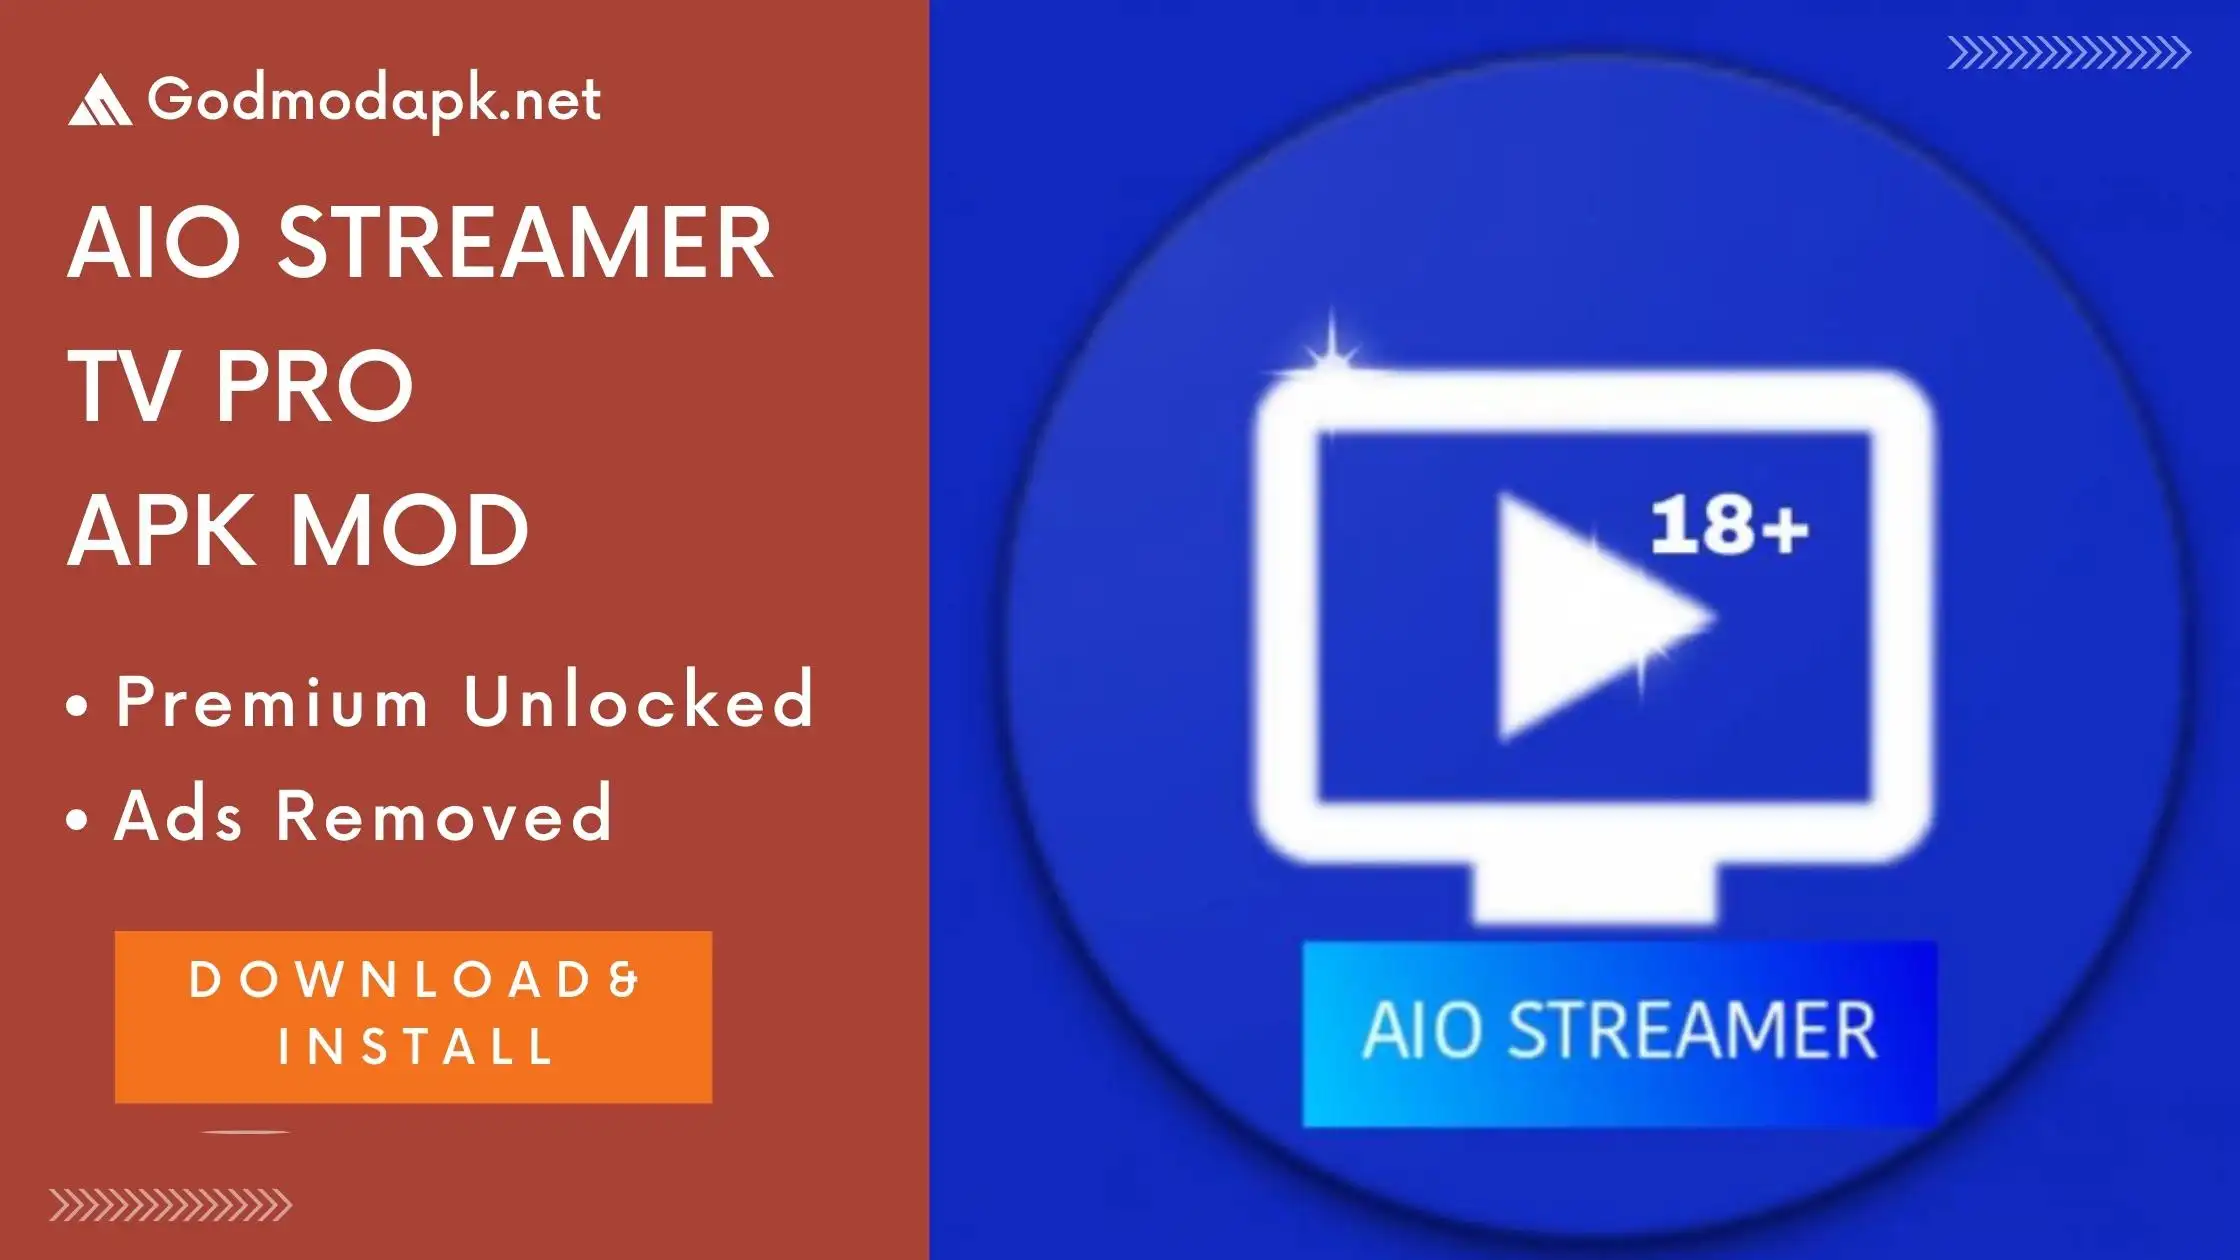 AIO Streamer TV Pro Apk Mod Download